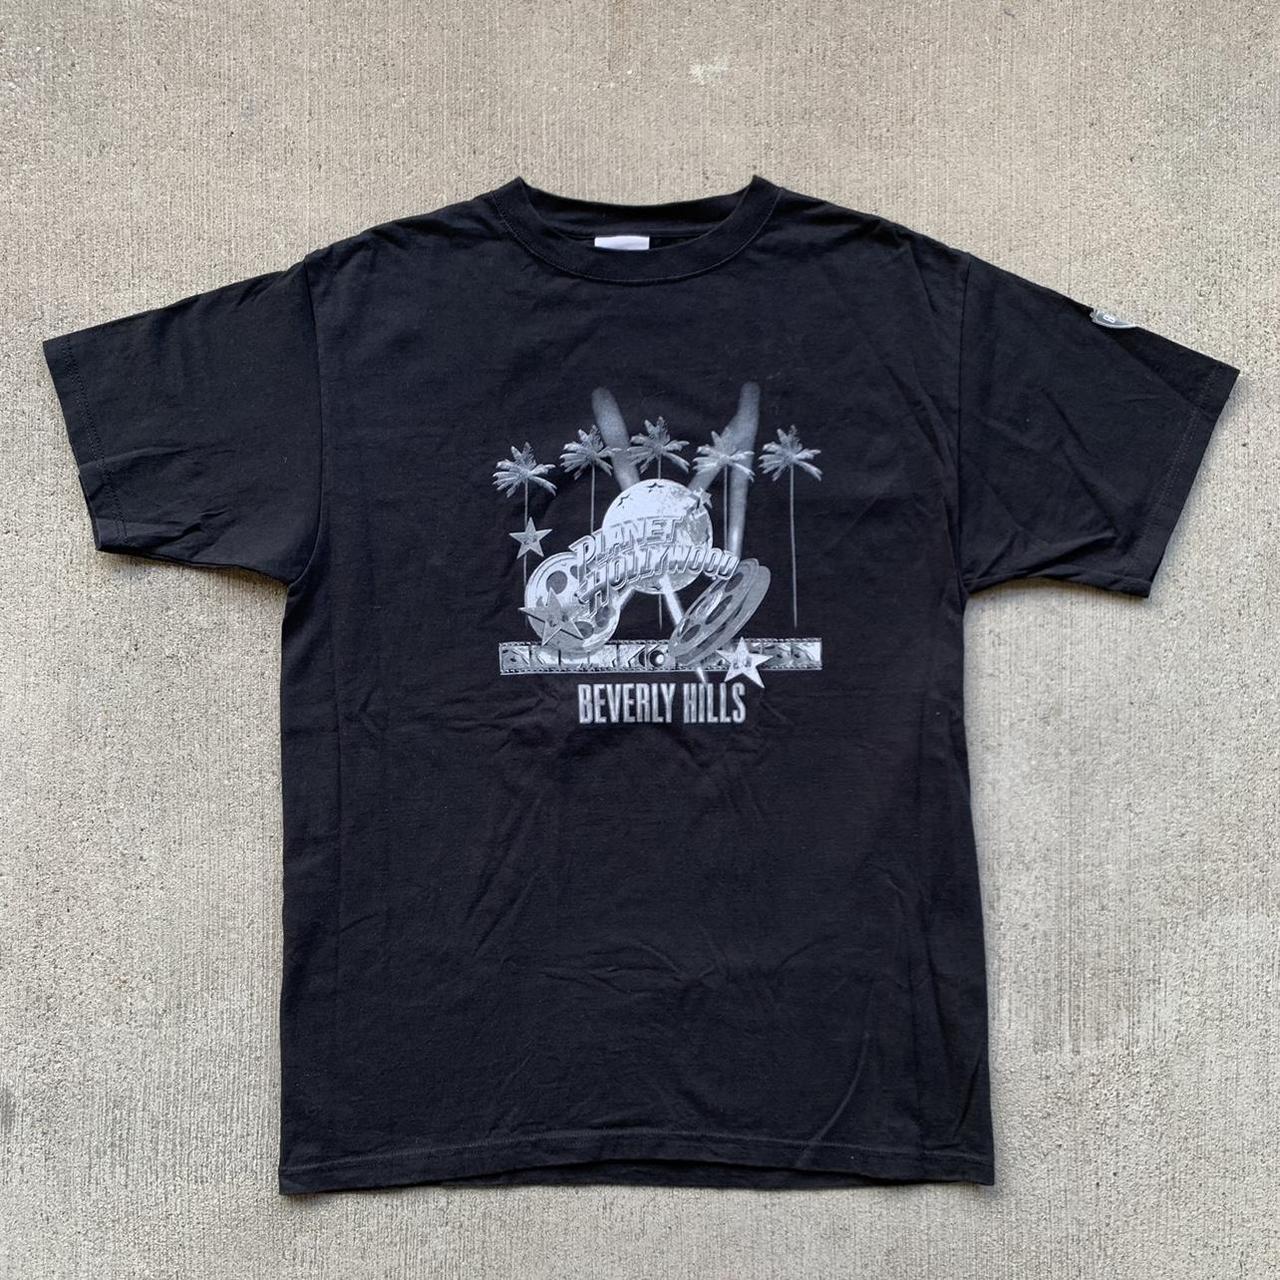 Planet Hollywood Men's Black and Grey T-shirt | Depop